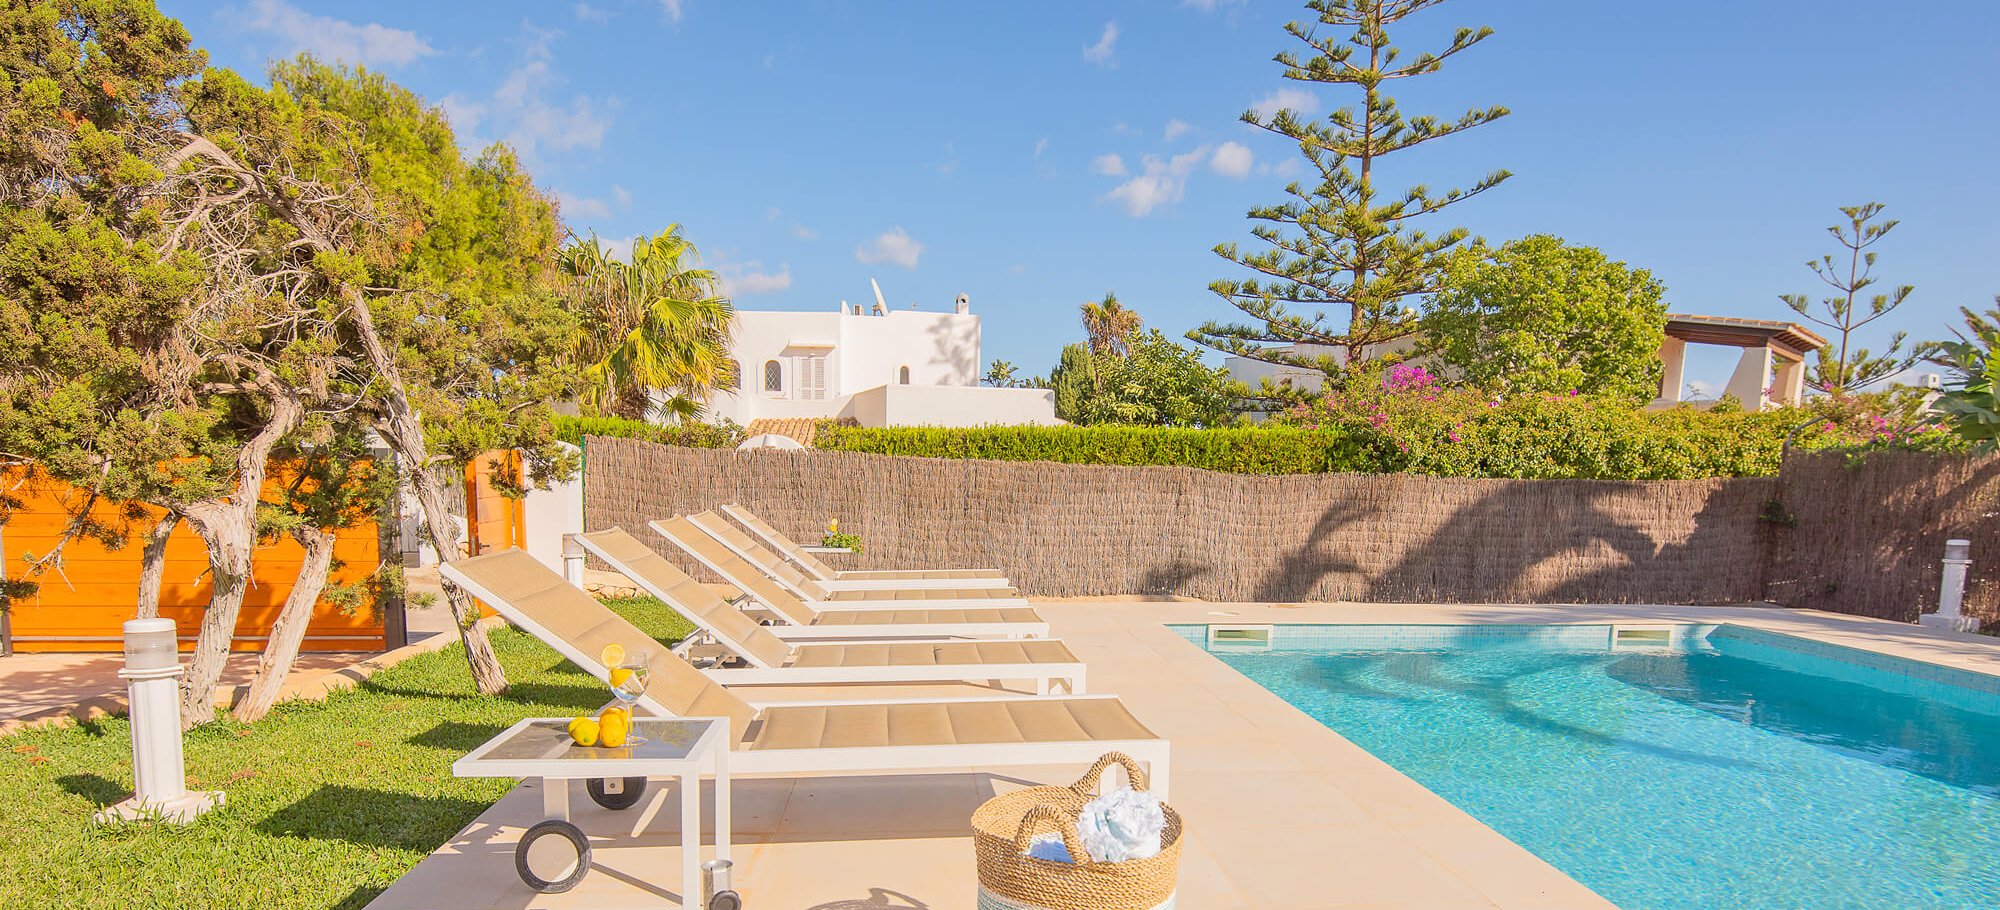 Villa Mallorca für 8 Personen mit Pool